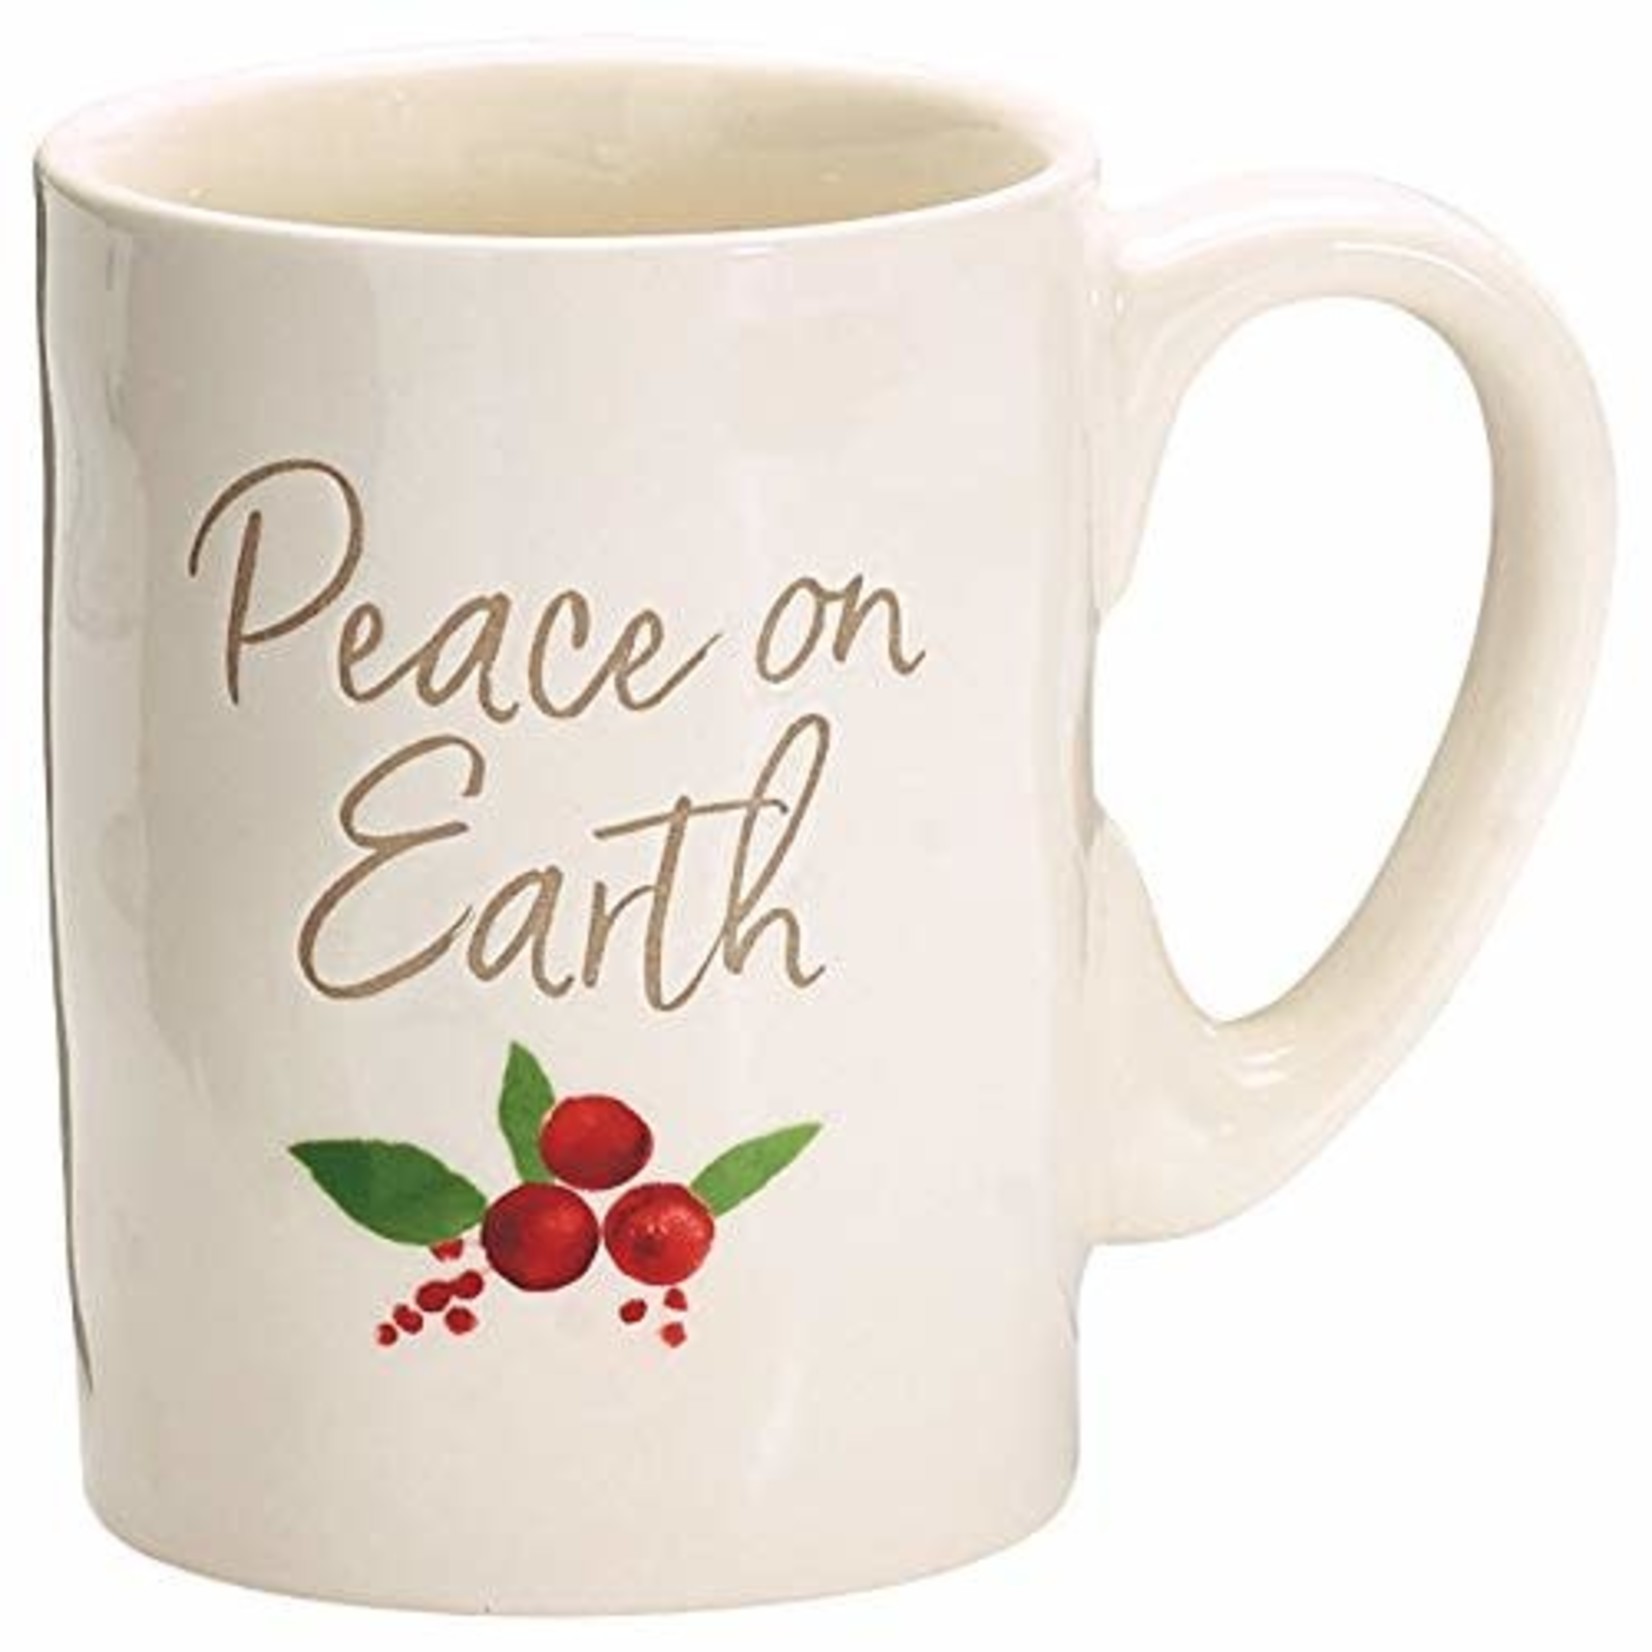 Peace on Earth mug